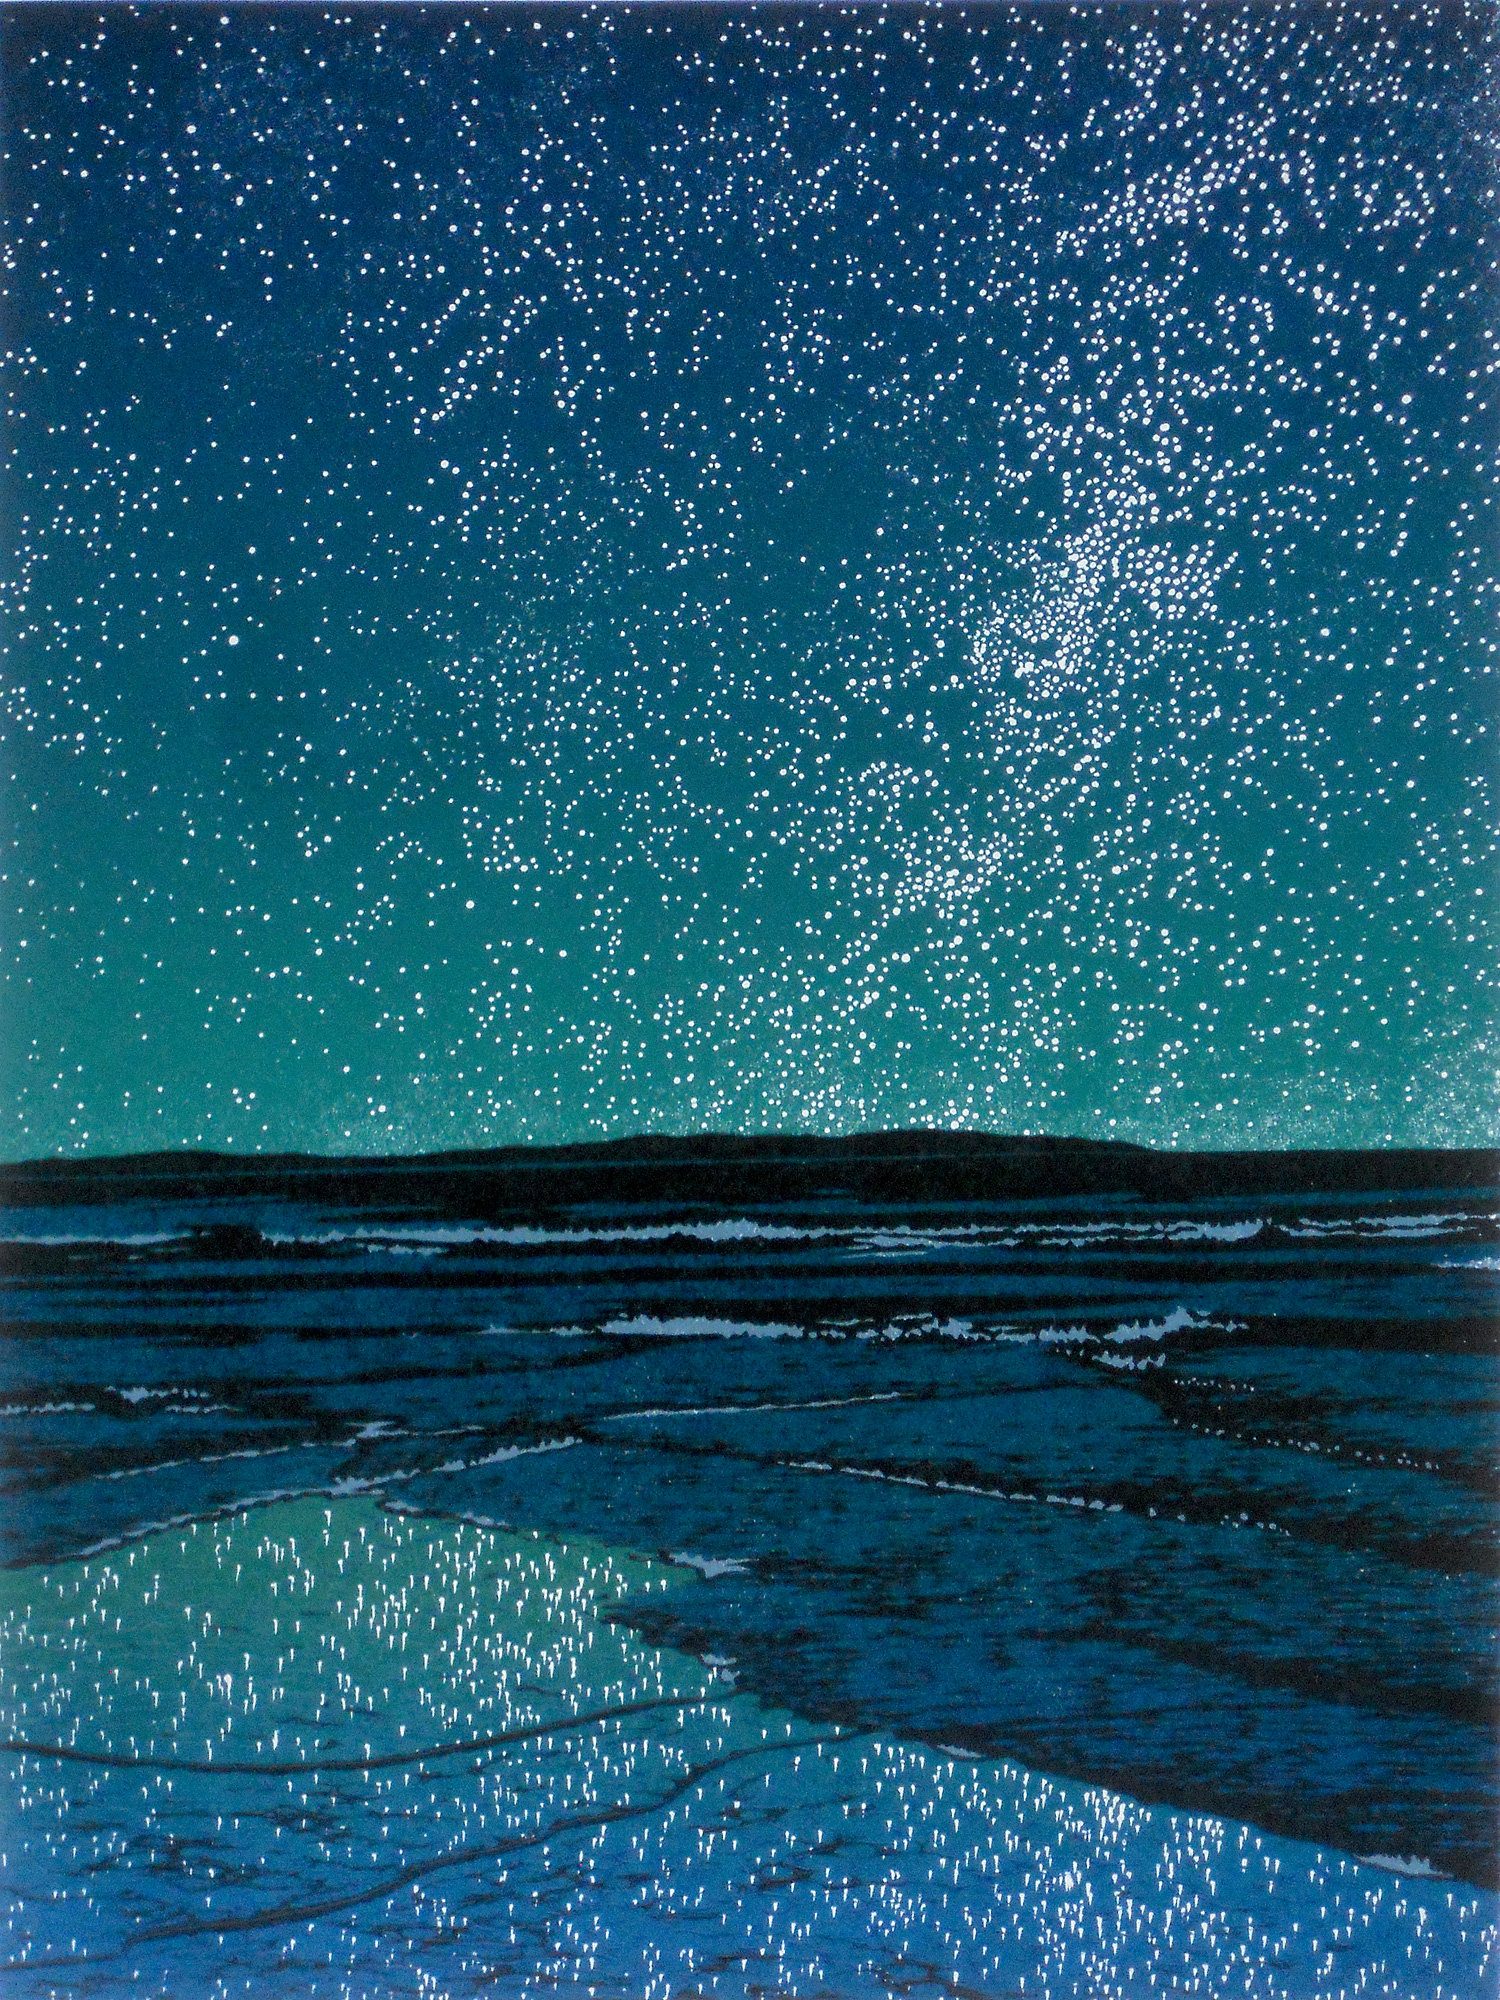 island linocut universe william sky night prints hays artist edition starry linocuts american limited vermont printmaking artists drawing linoprint skies